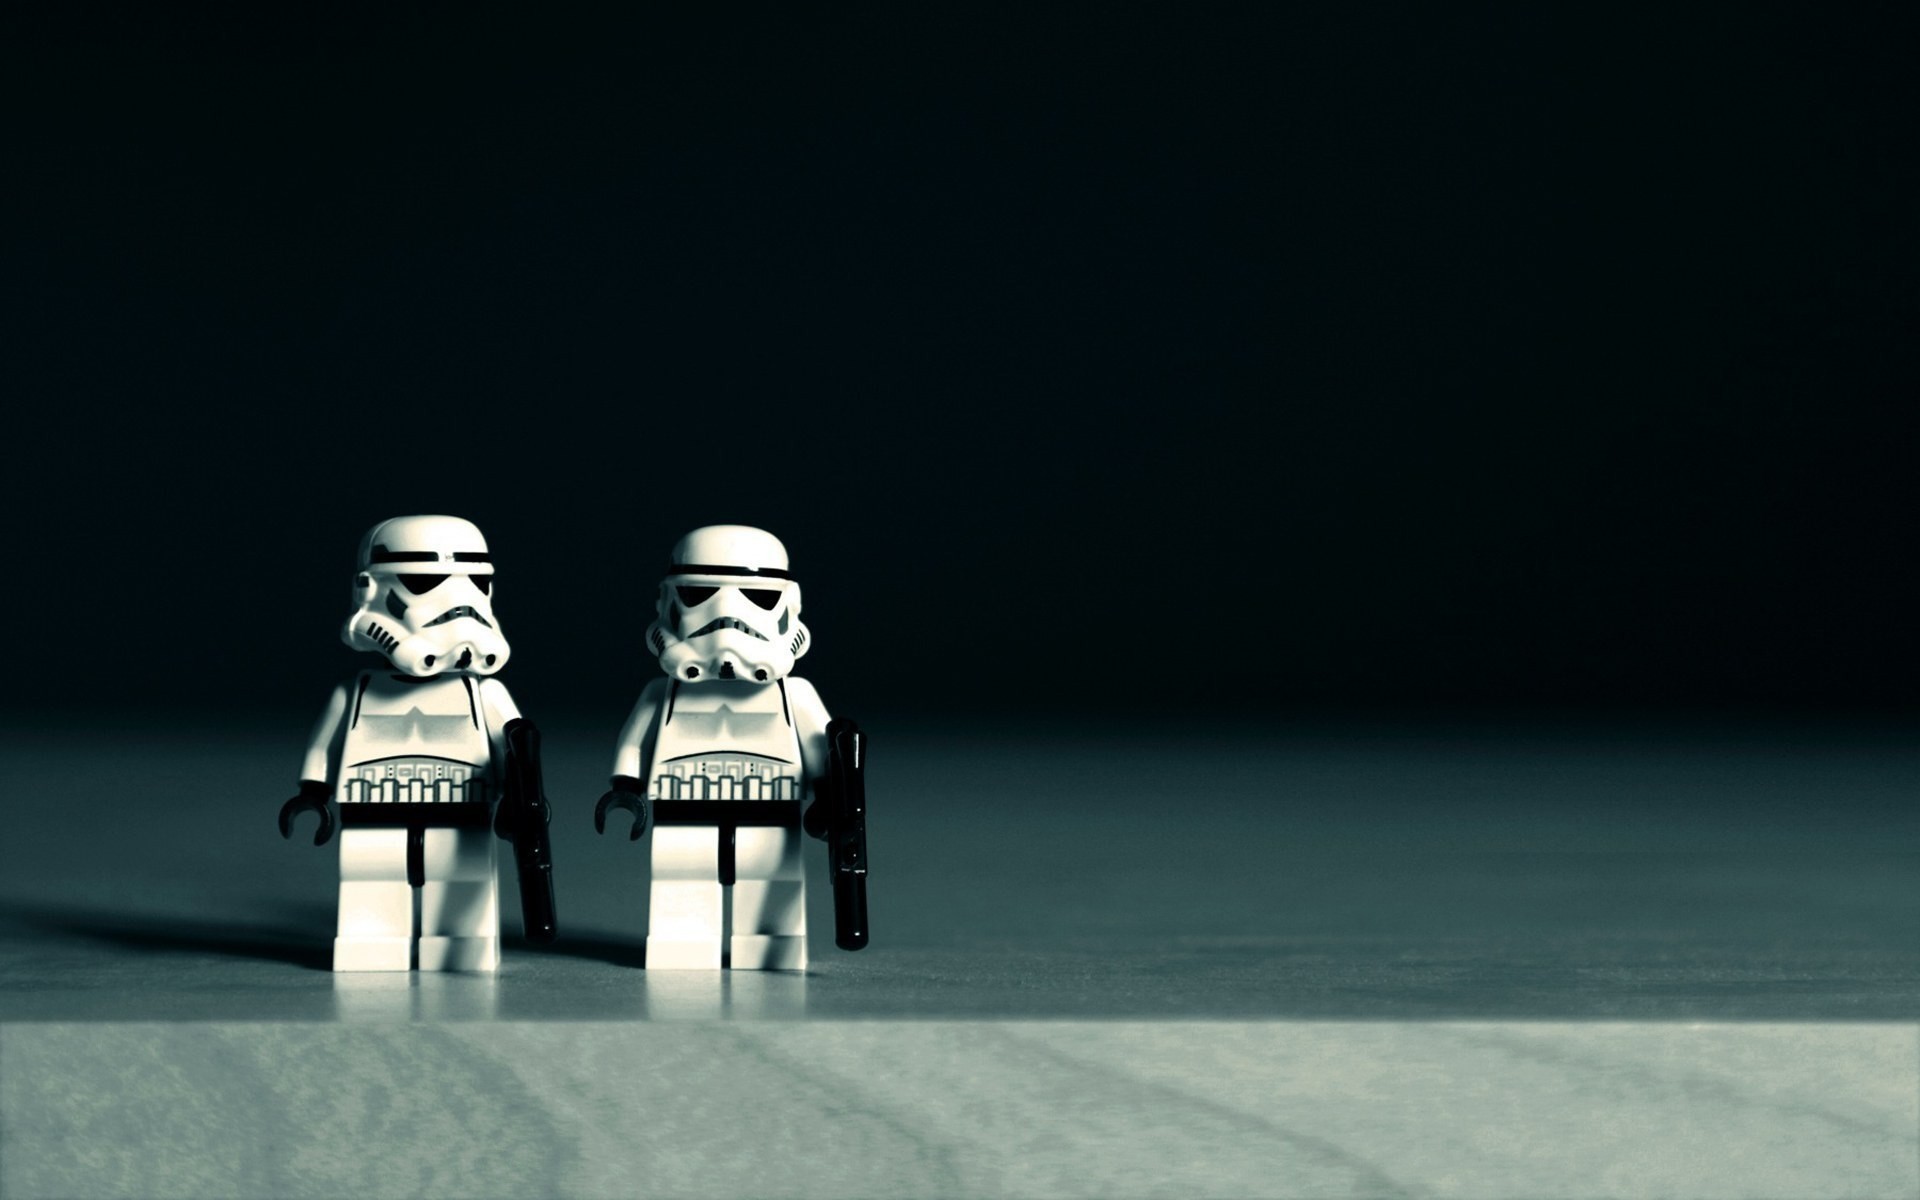 We Review LEGO Star Wars The Skywalker Saga